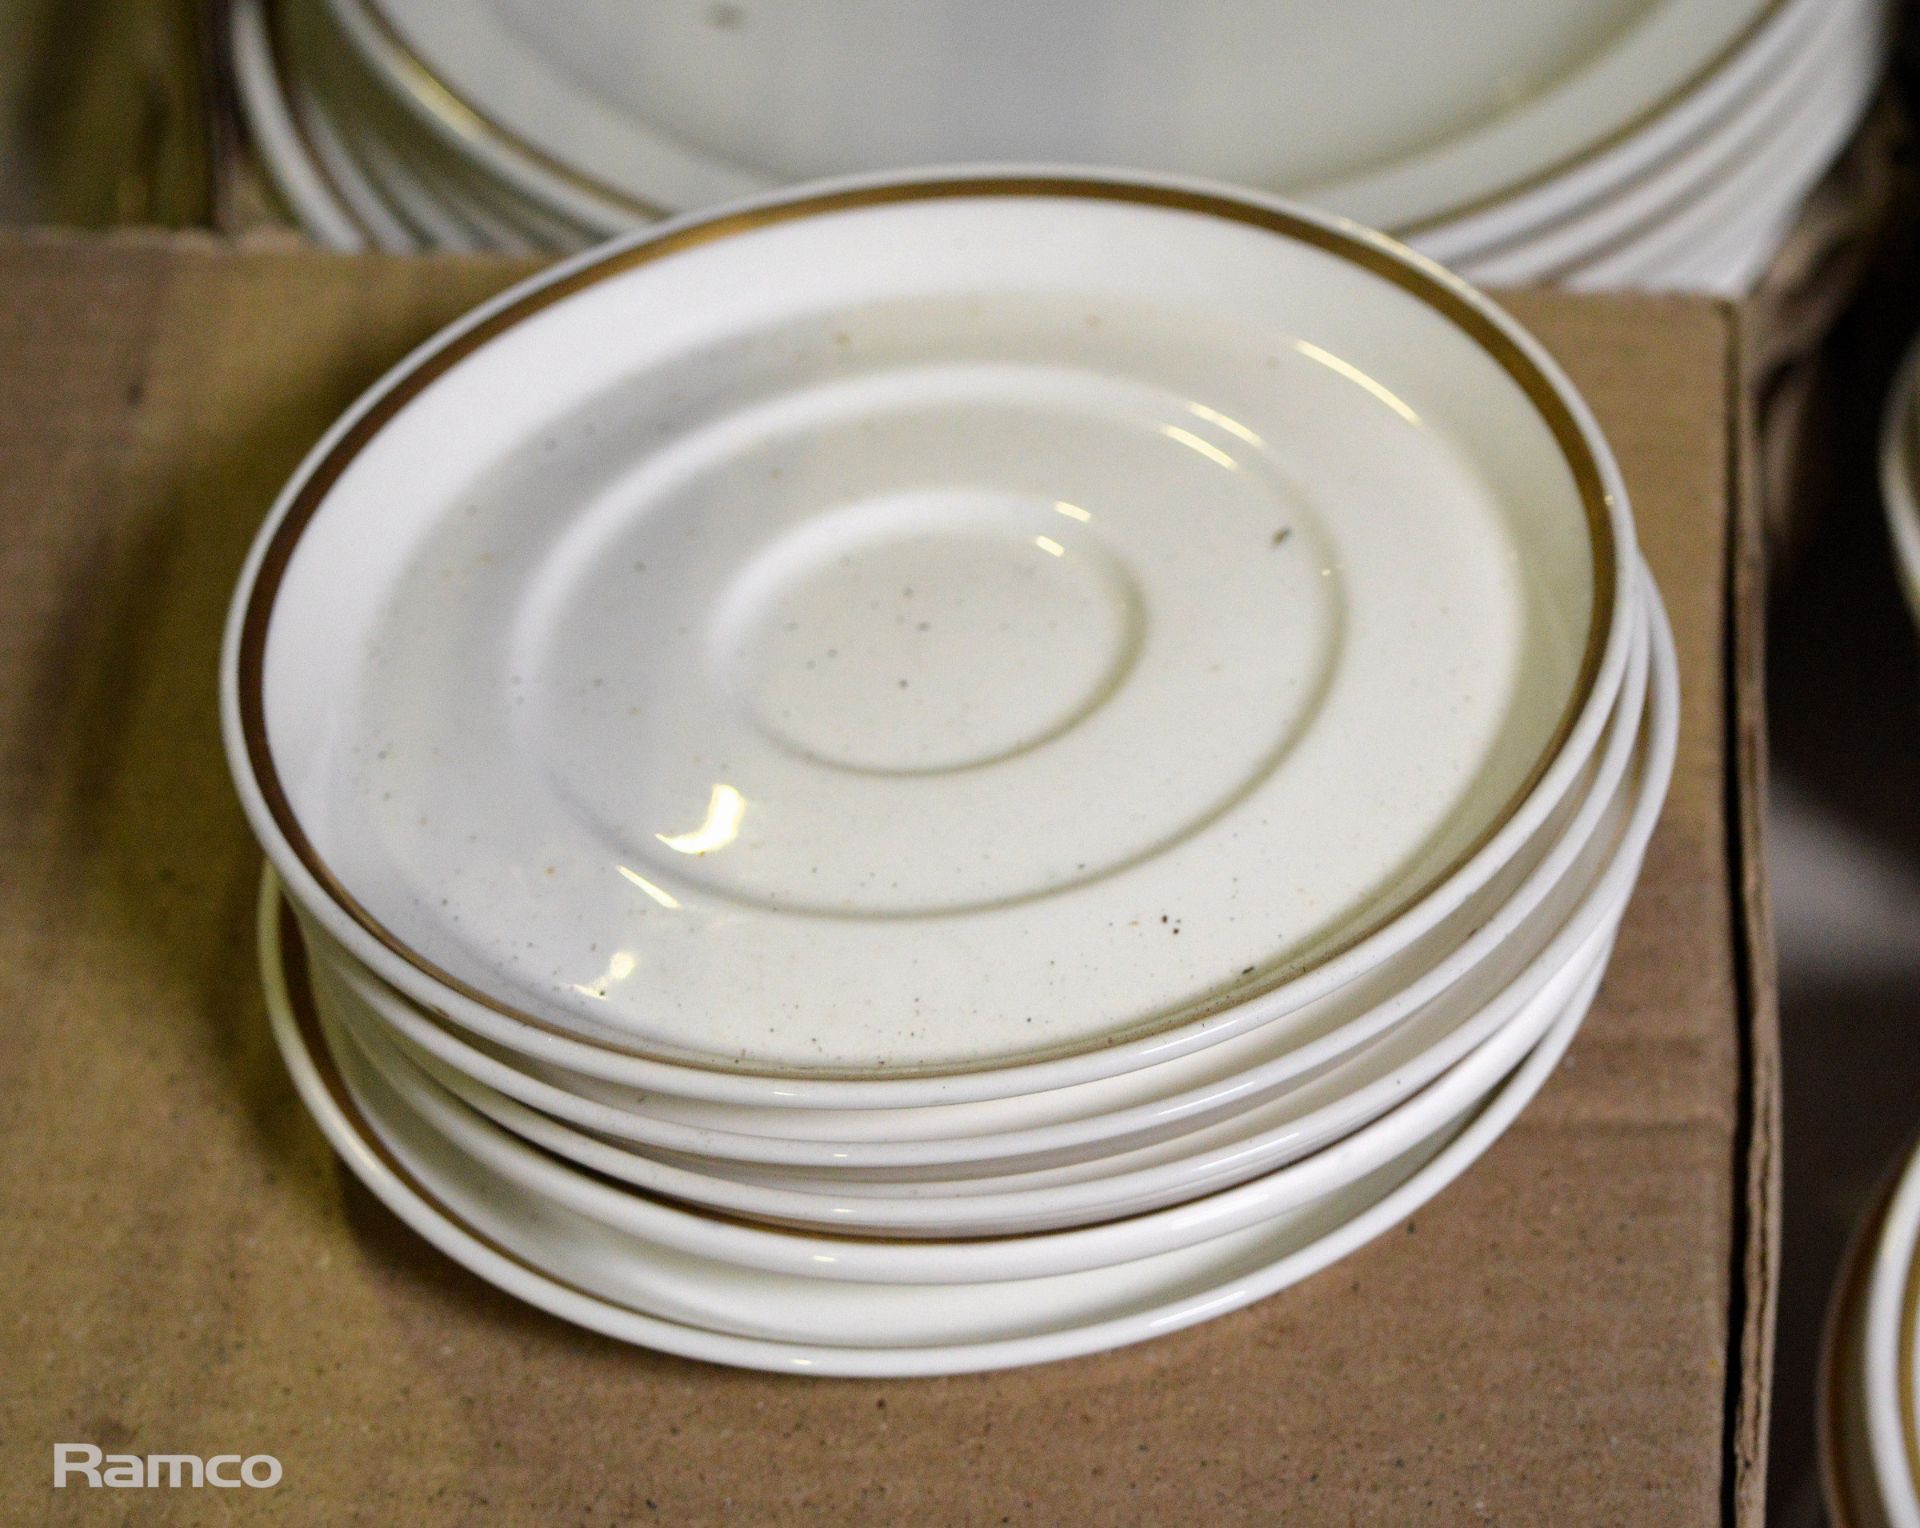 Crockery - plates, bowls, saucers - Image 4 of 4